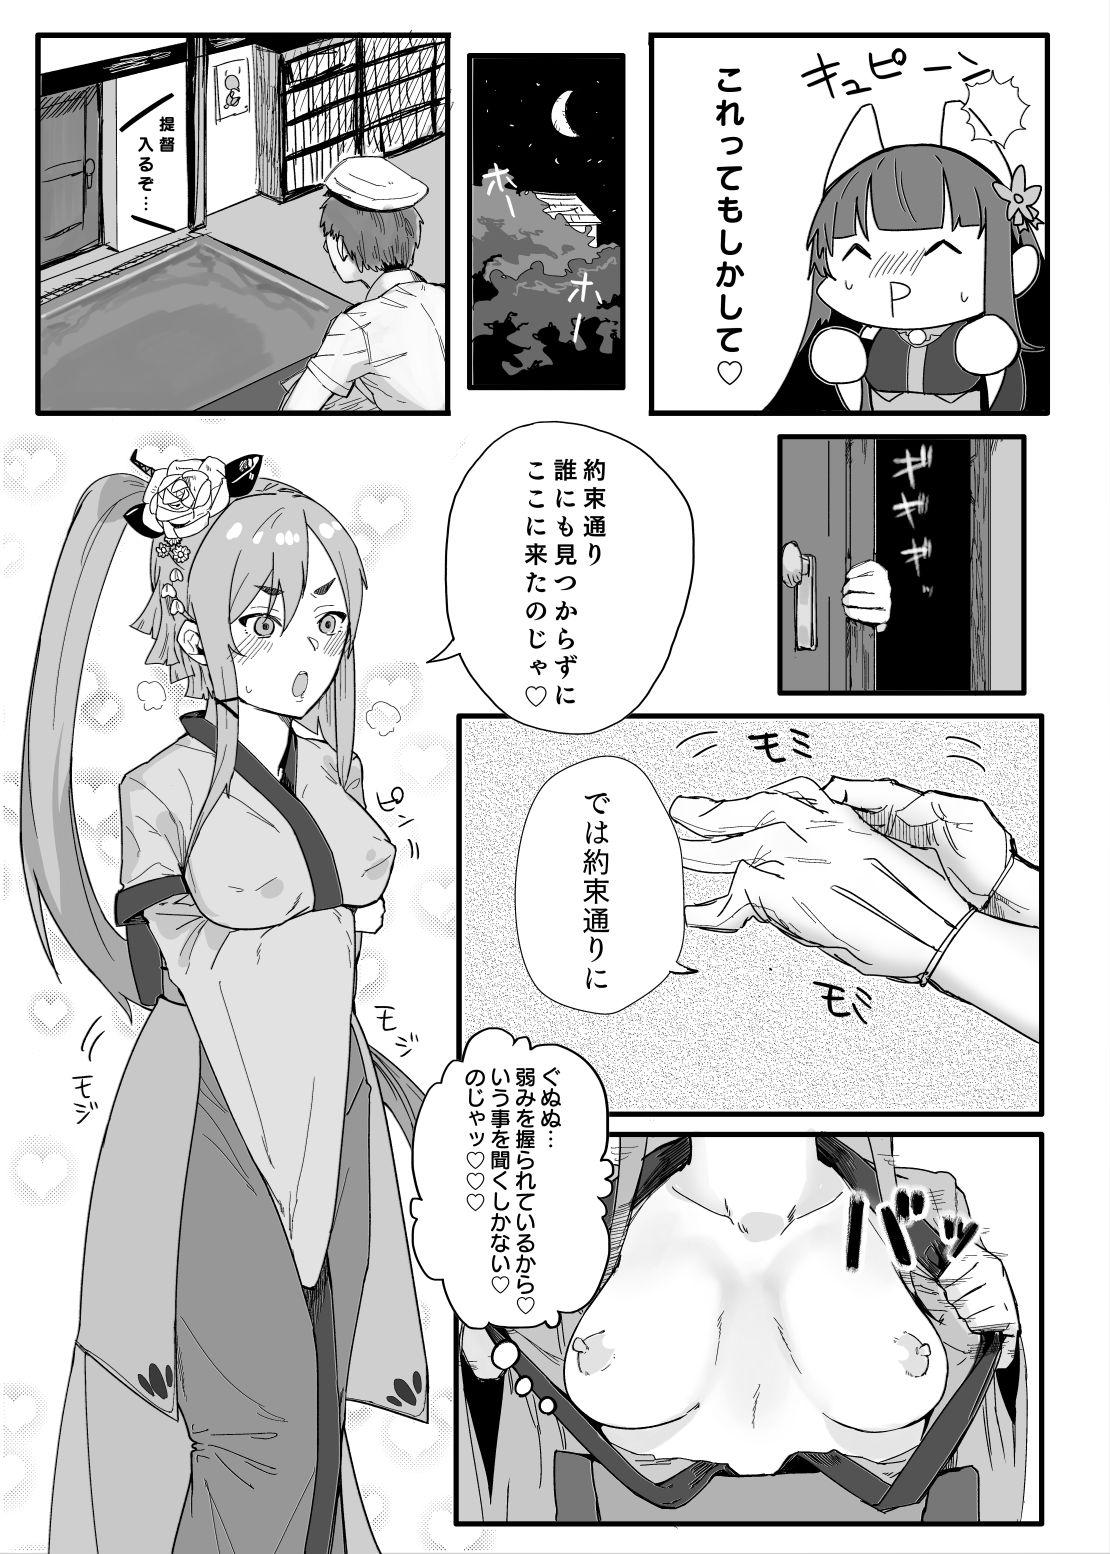 Car Akagi-san wa Sore o Gaman dekinai - Warship girls Pounding - Page 7